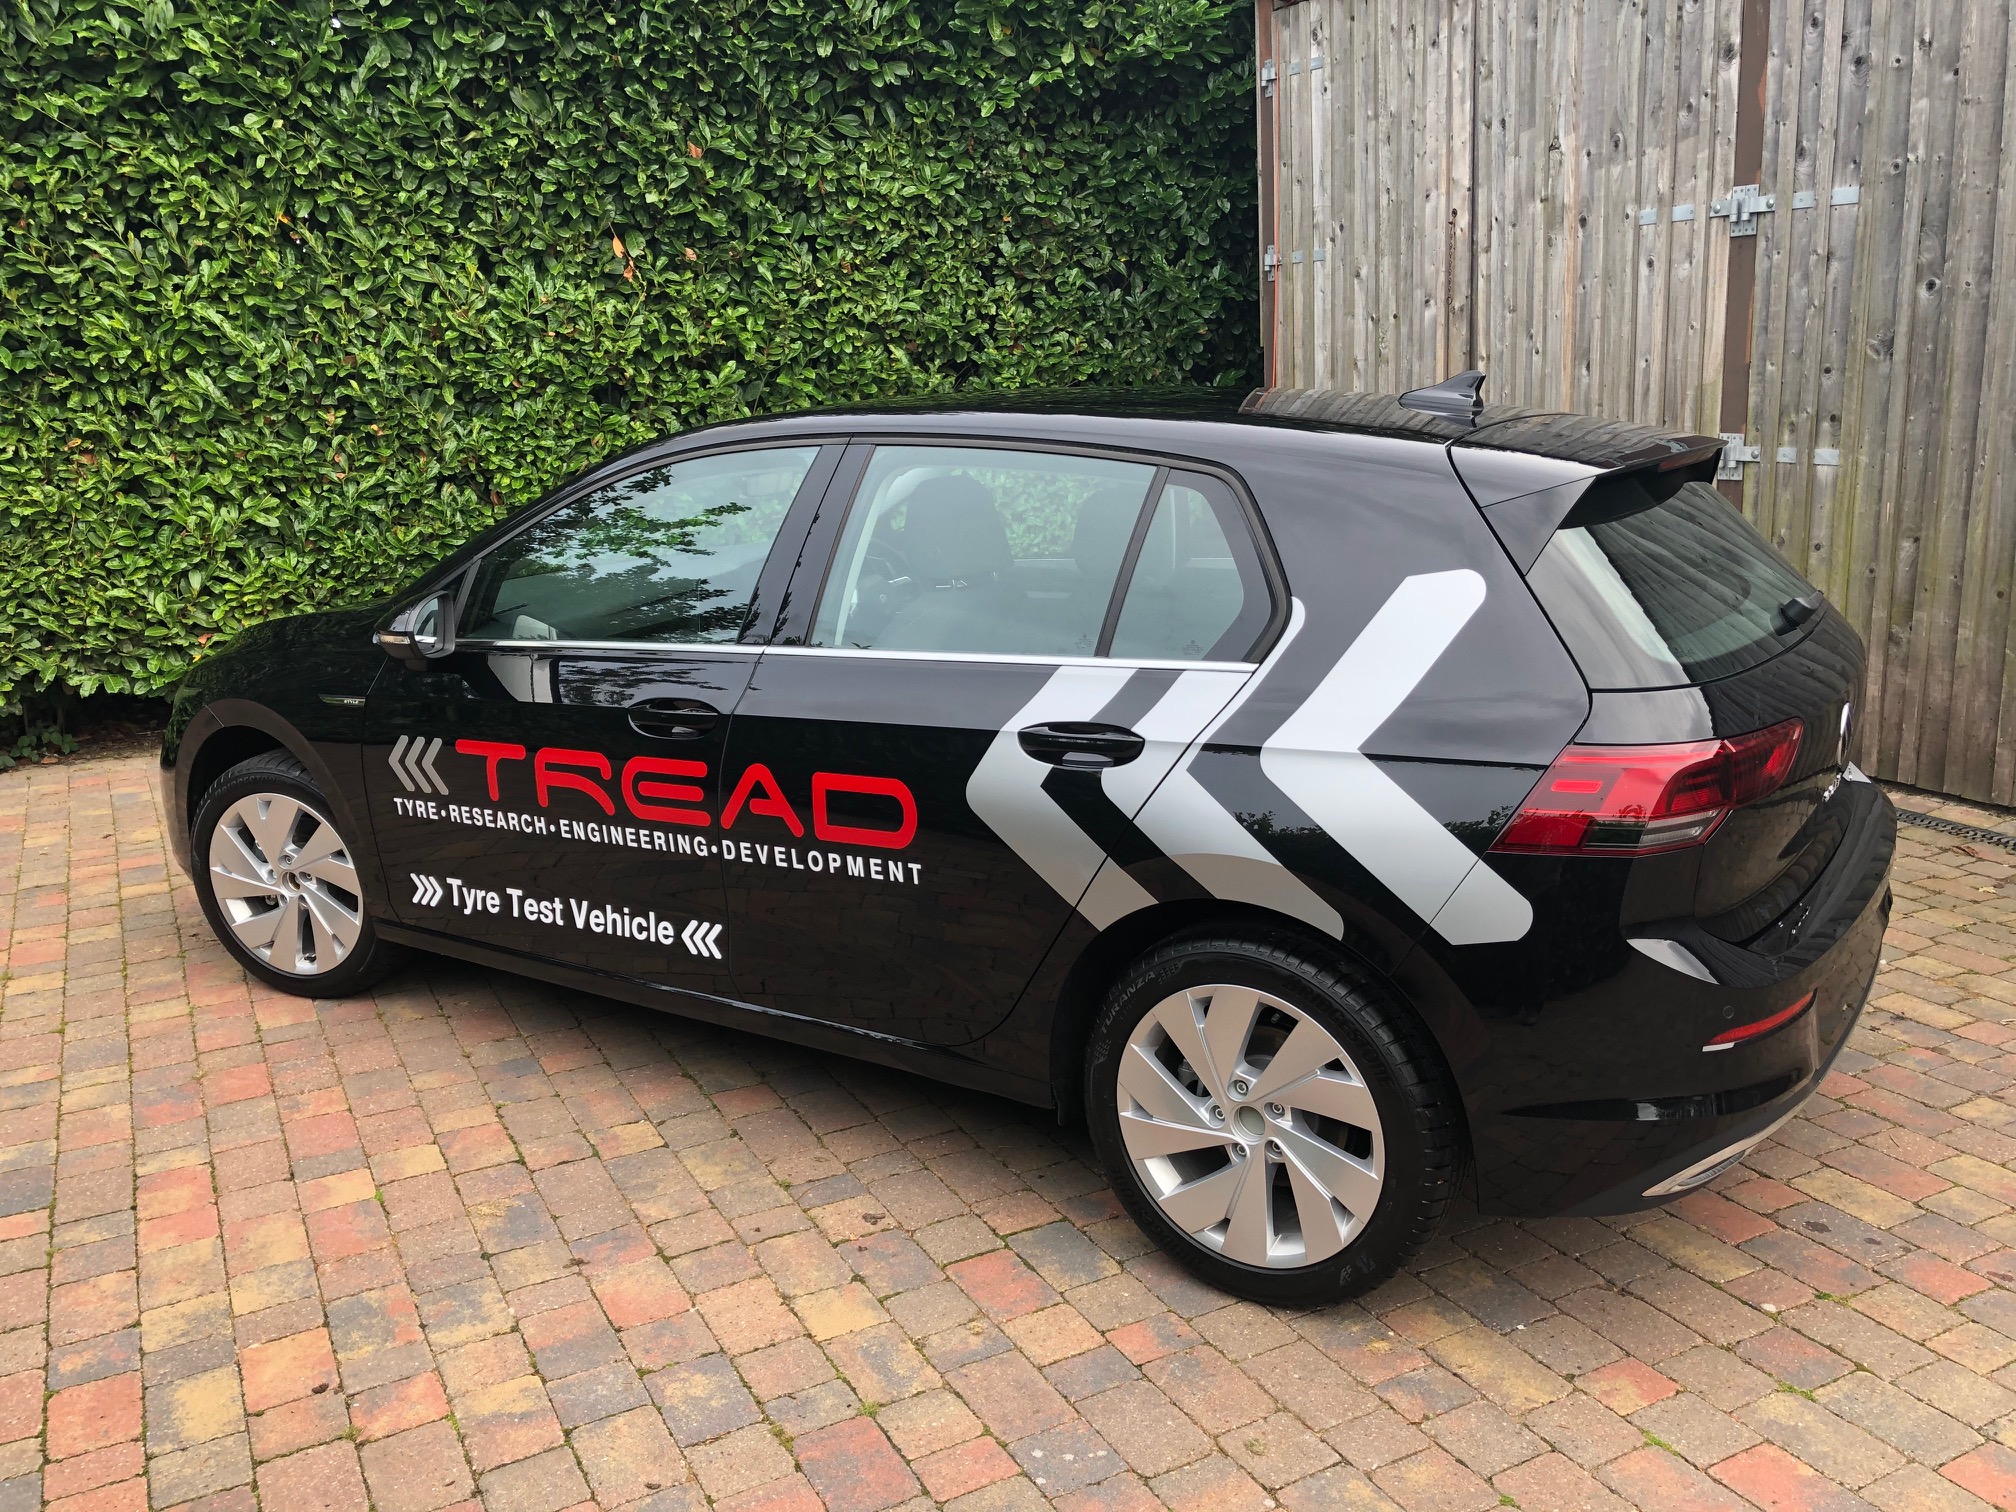 Tread Ltd adds Golf to vehicle testing fleet